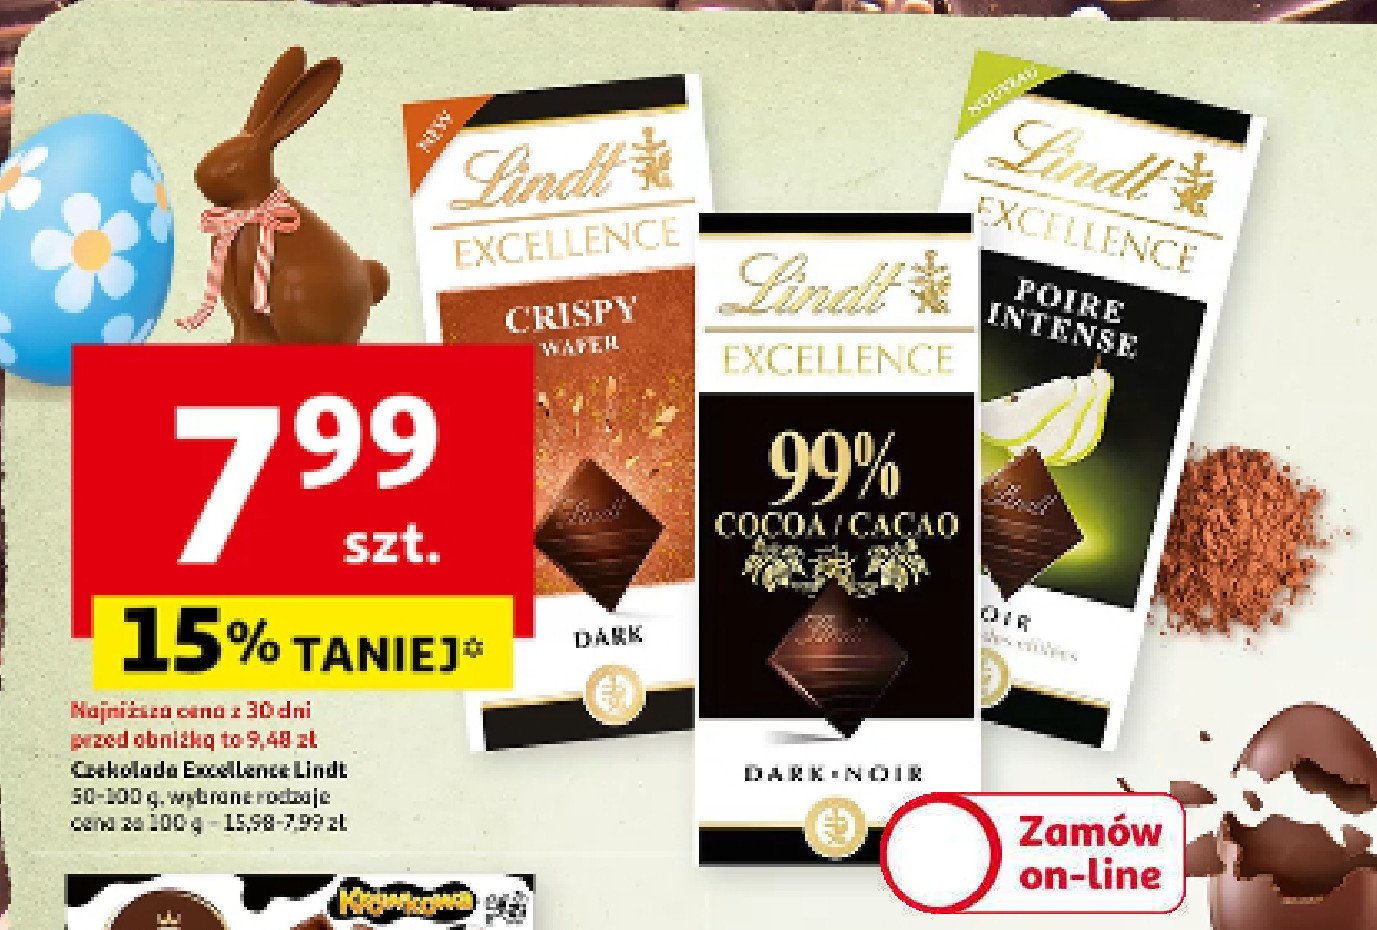 Czekolada 99 % cocoa Lindt excellence promocja